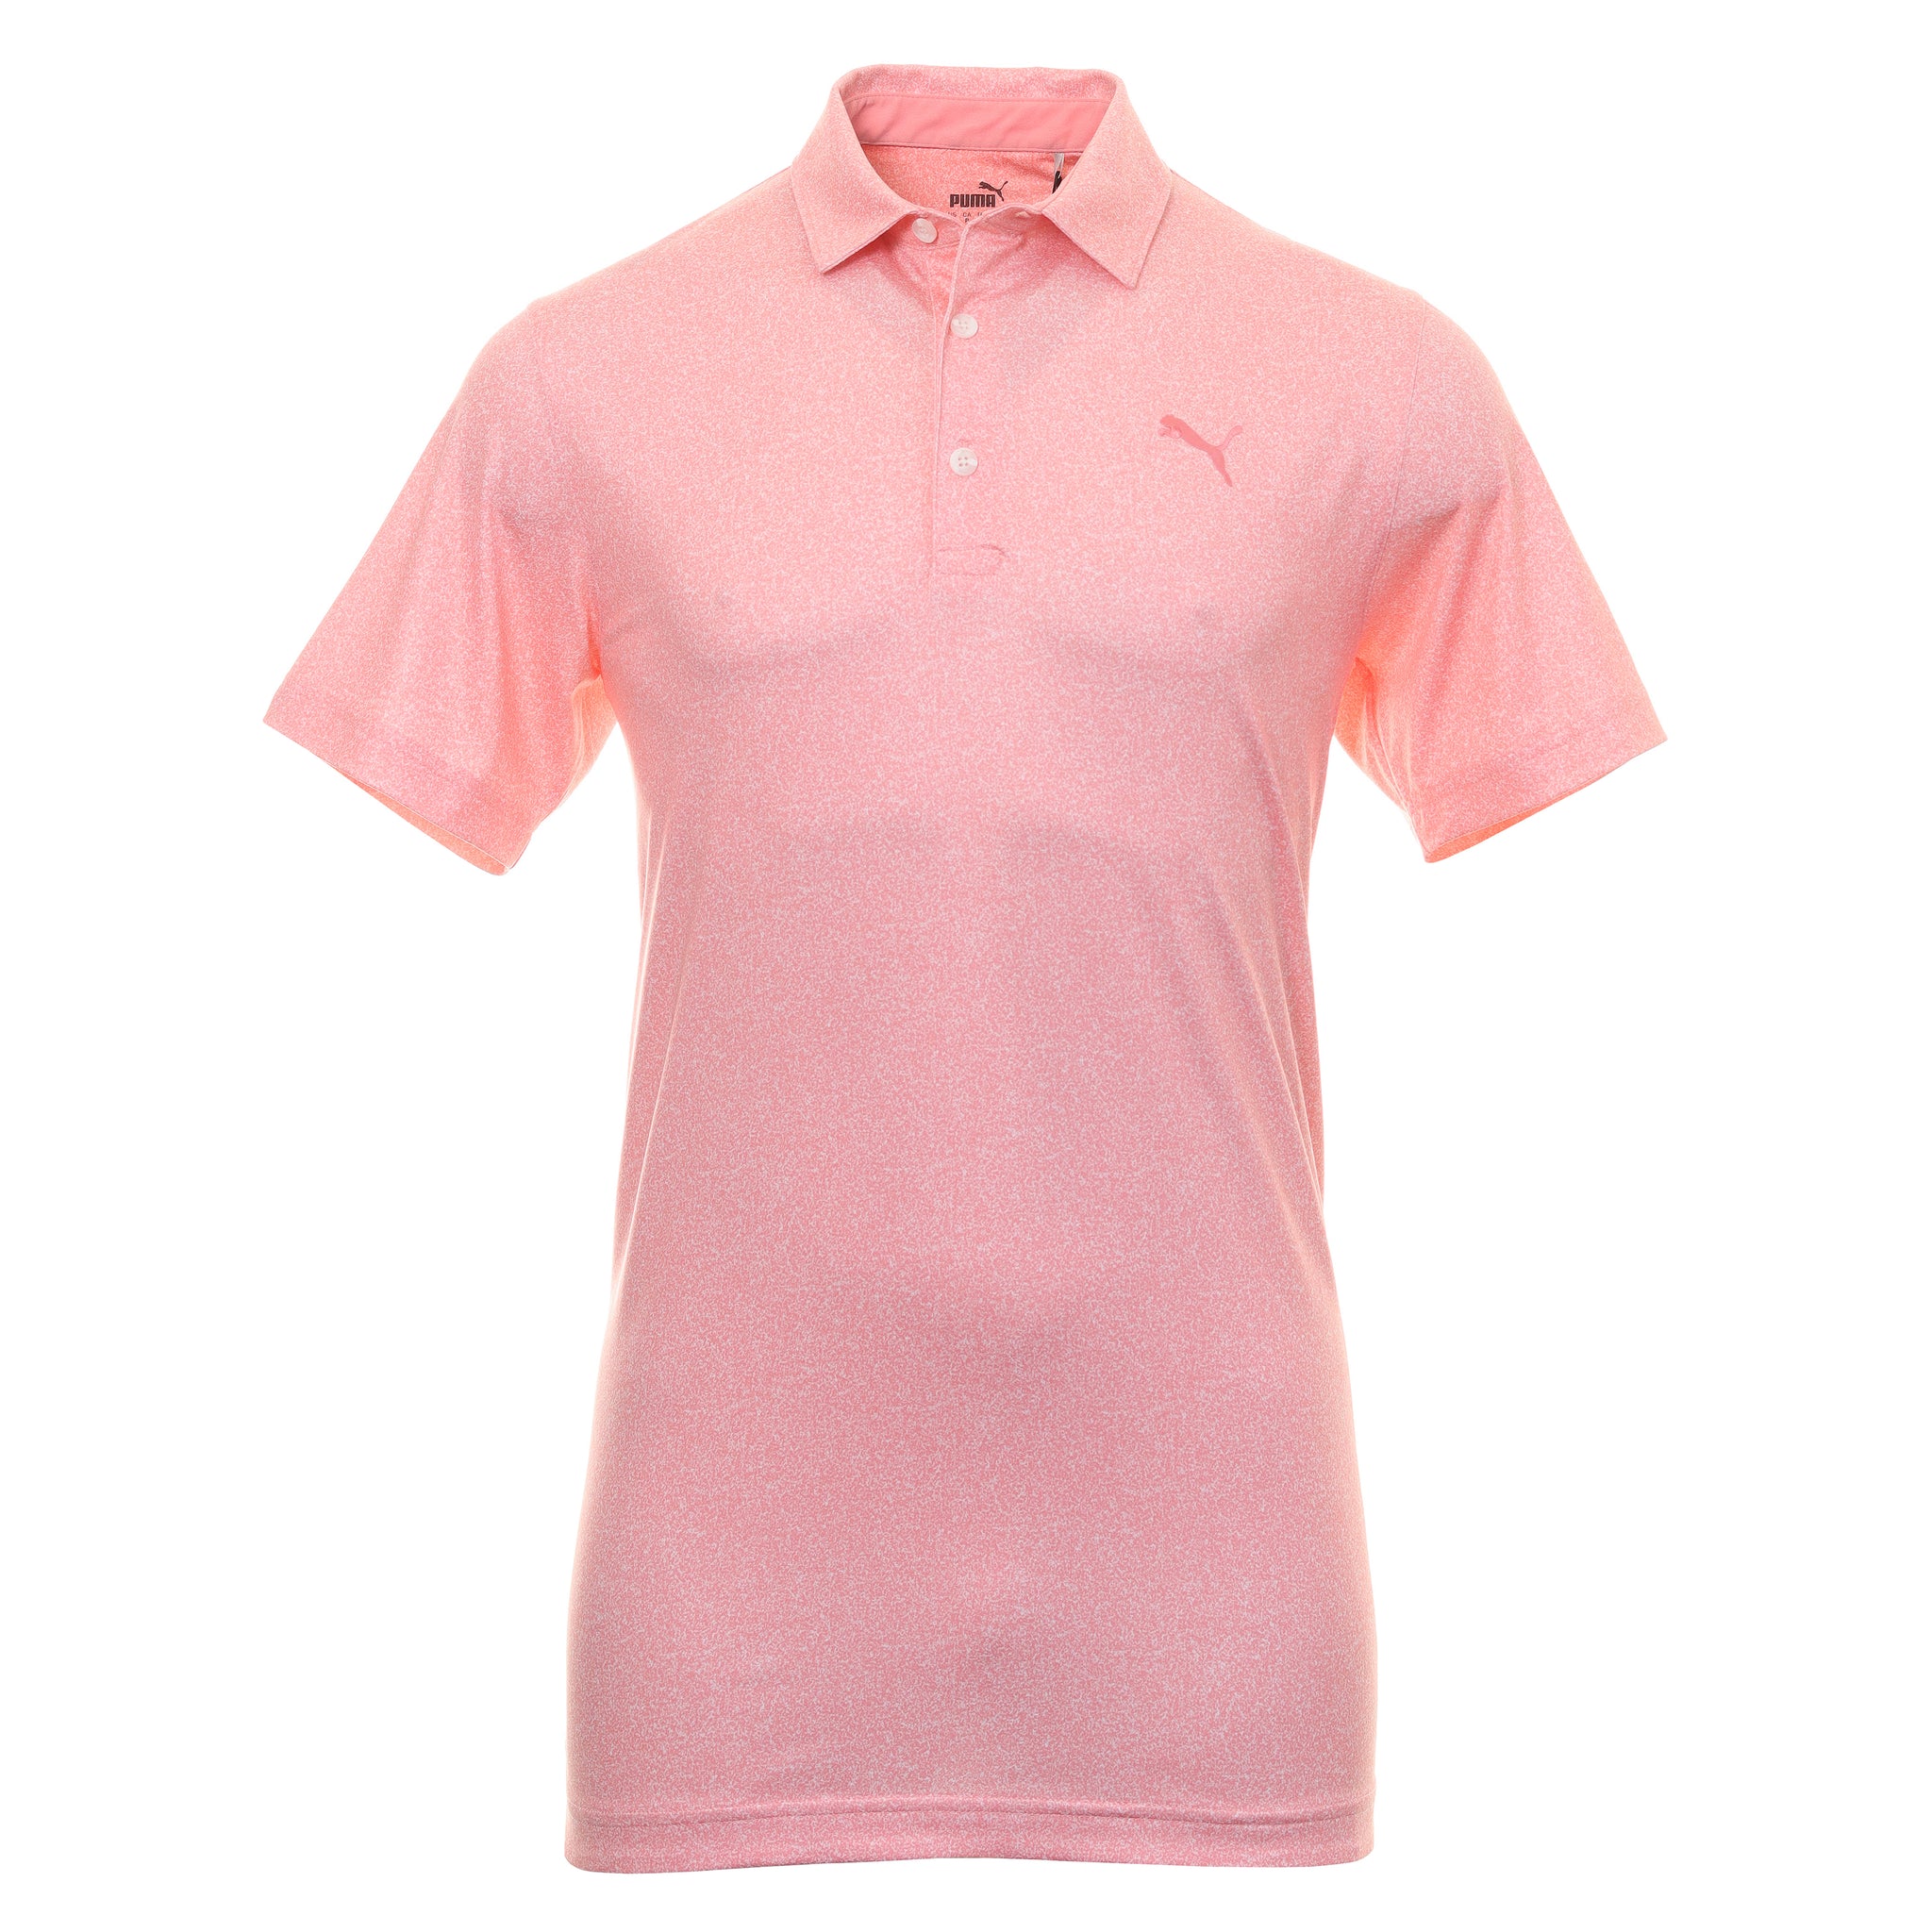 Puma Golf Primary Polo Shirt 538993 Flamingo Pink 05 | Function18 ...